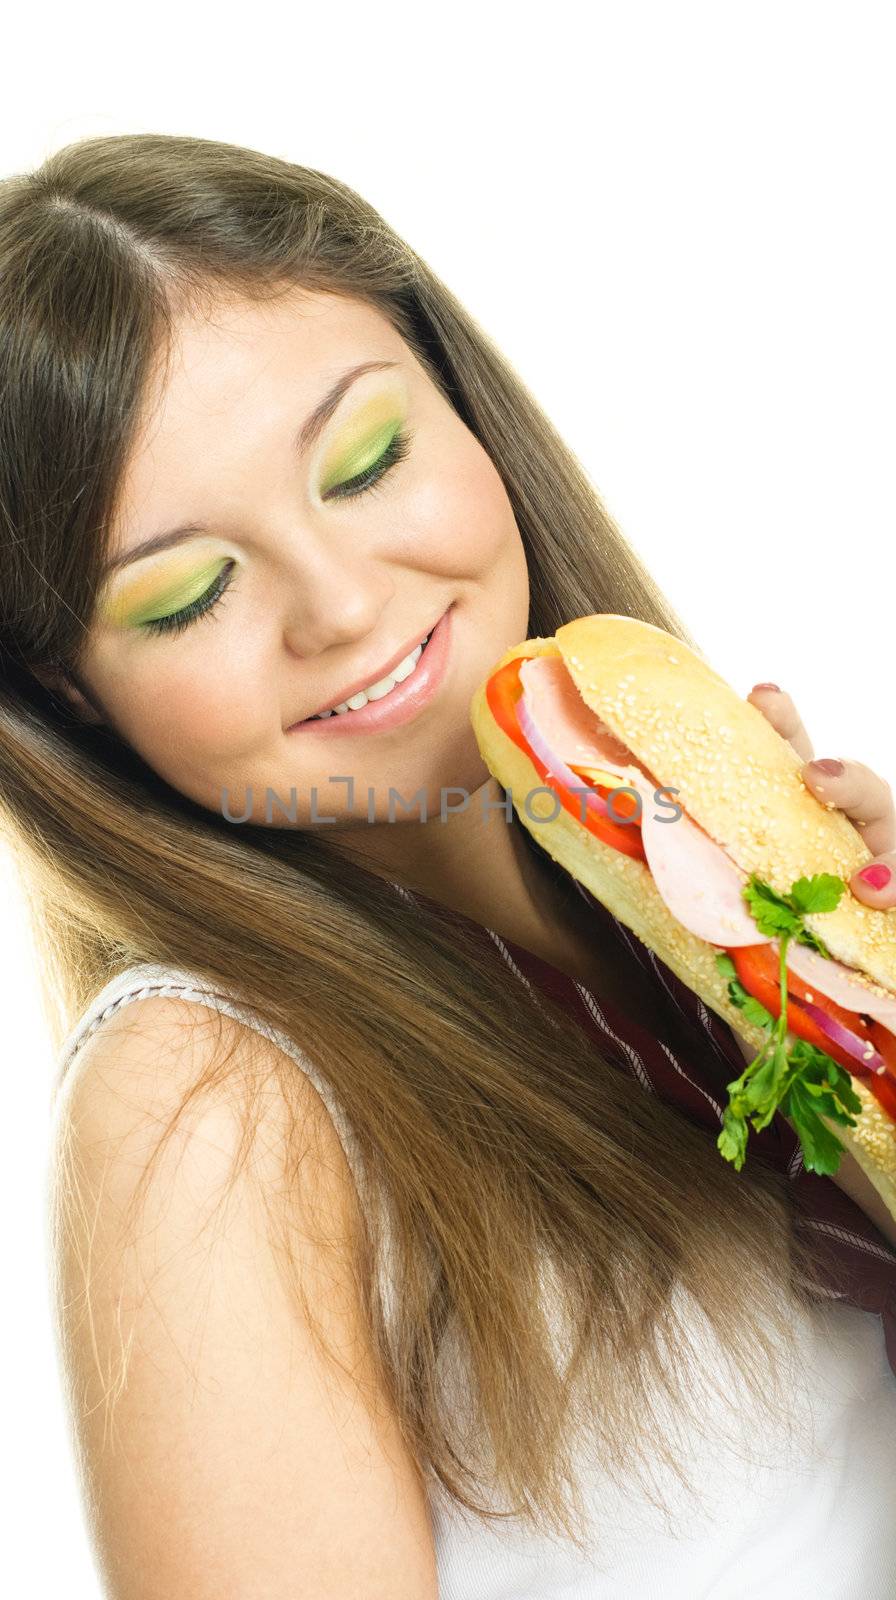 pretty girl eating a sandwich by lanak